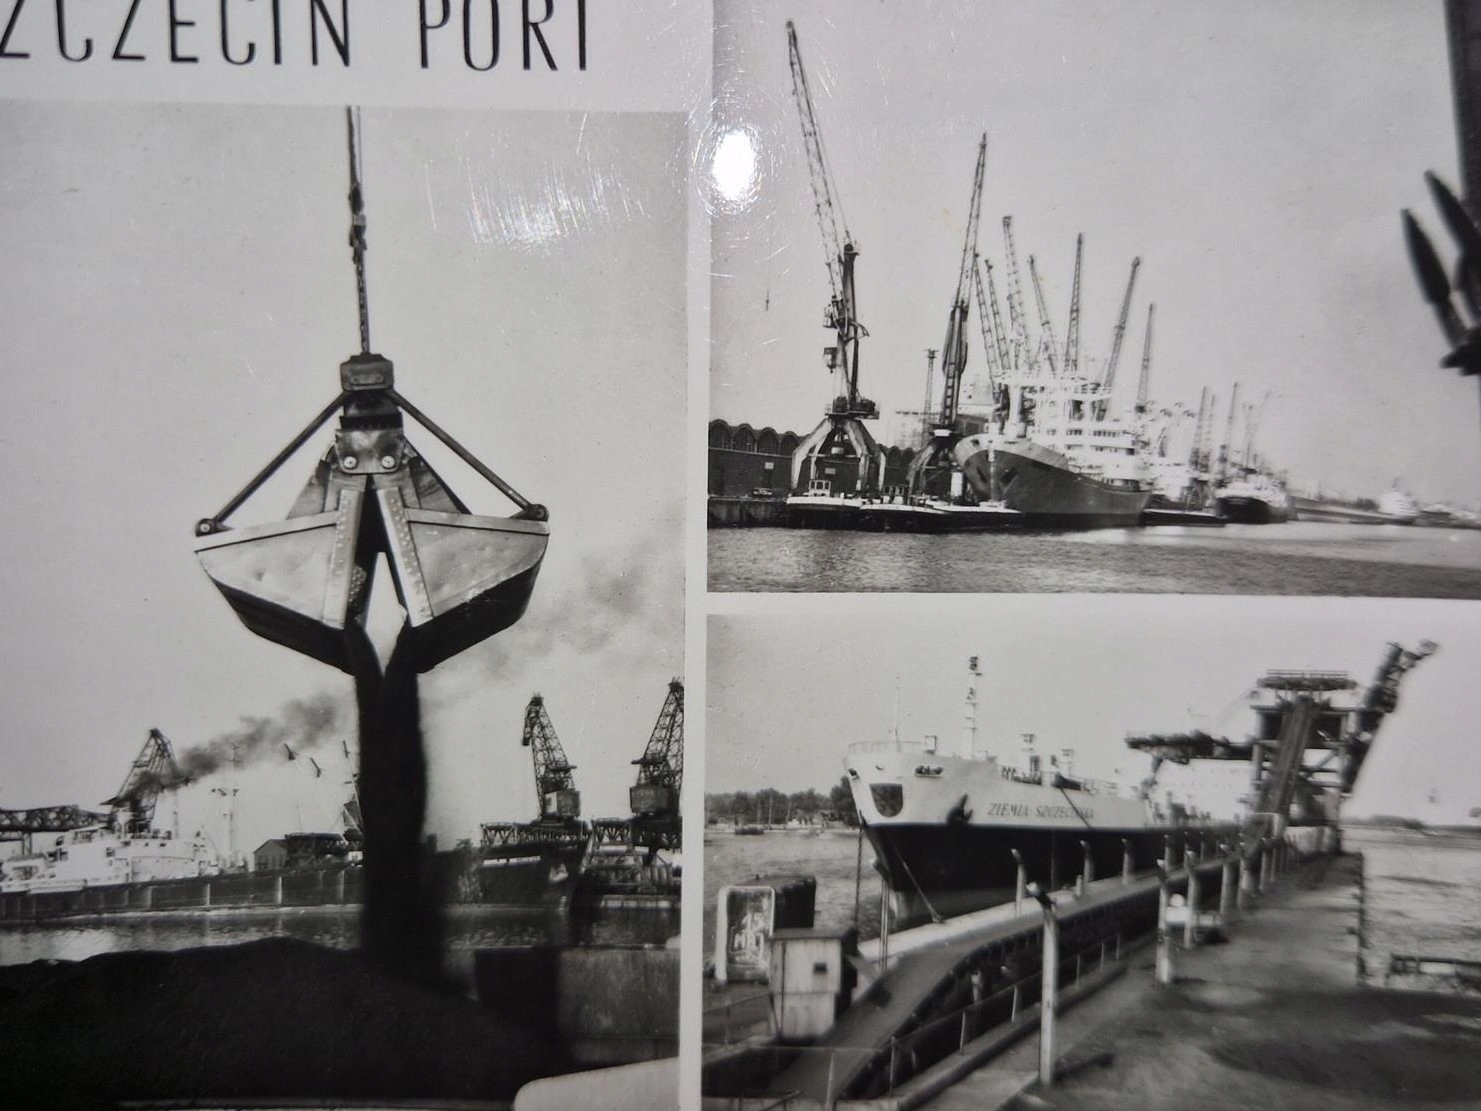 Szczecin Port